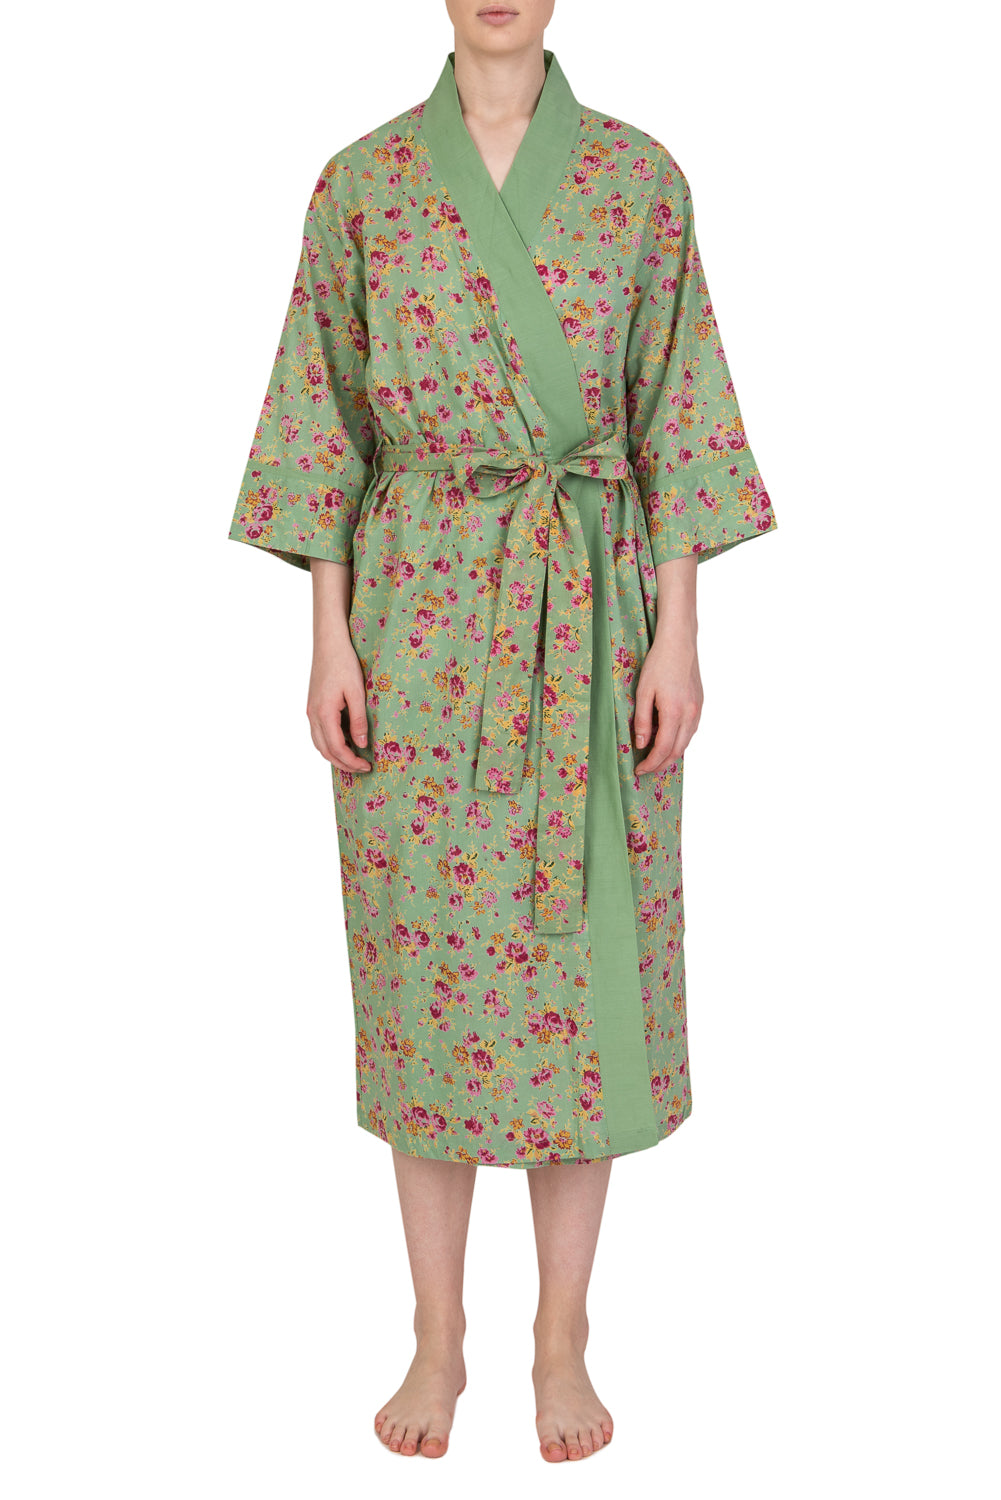 Gabrielle Parker Cotton Kimono - Rambling Rose Light Green